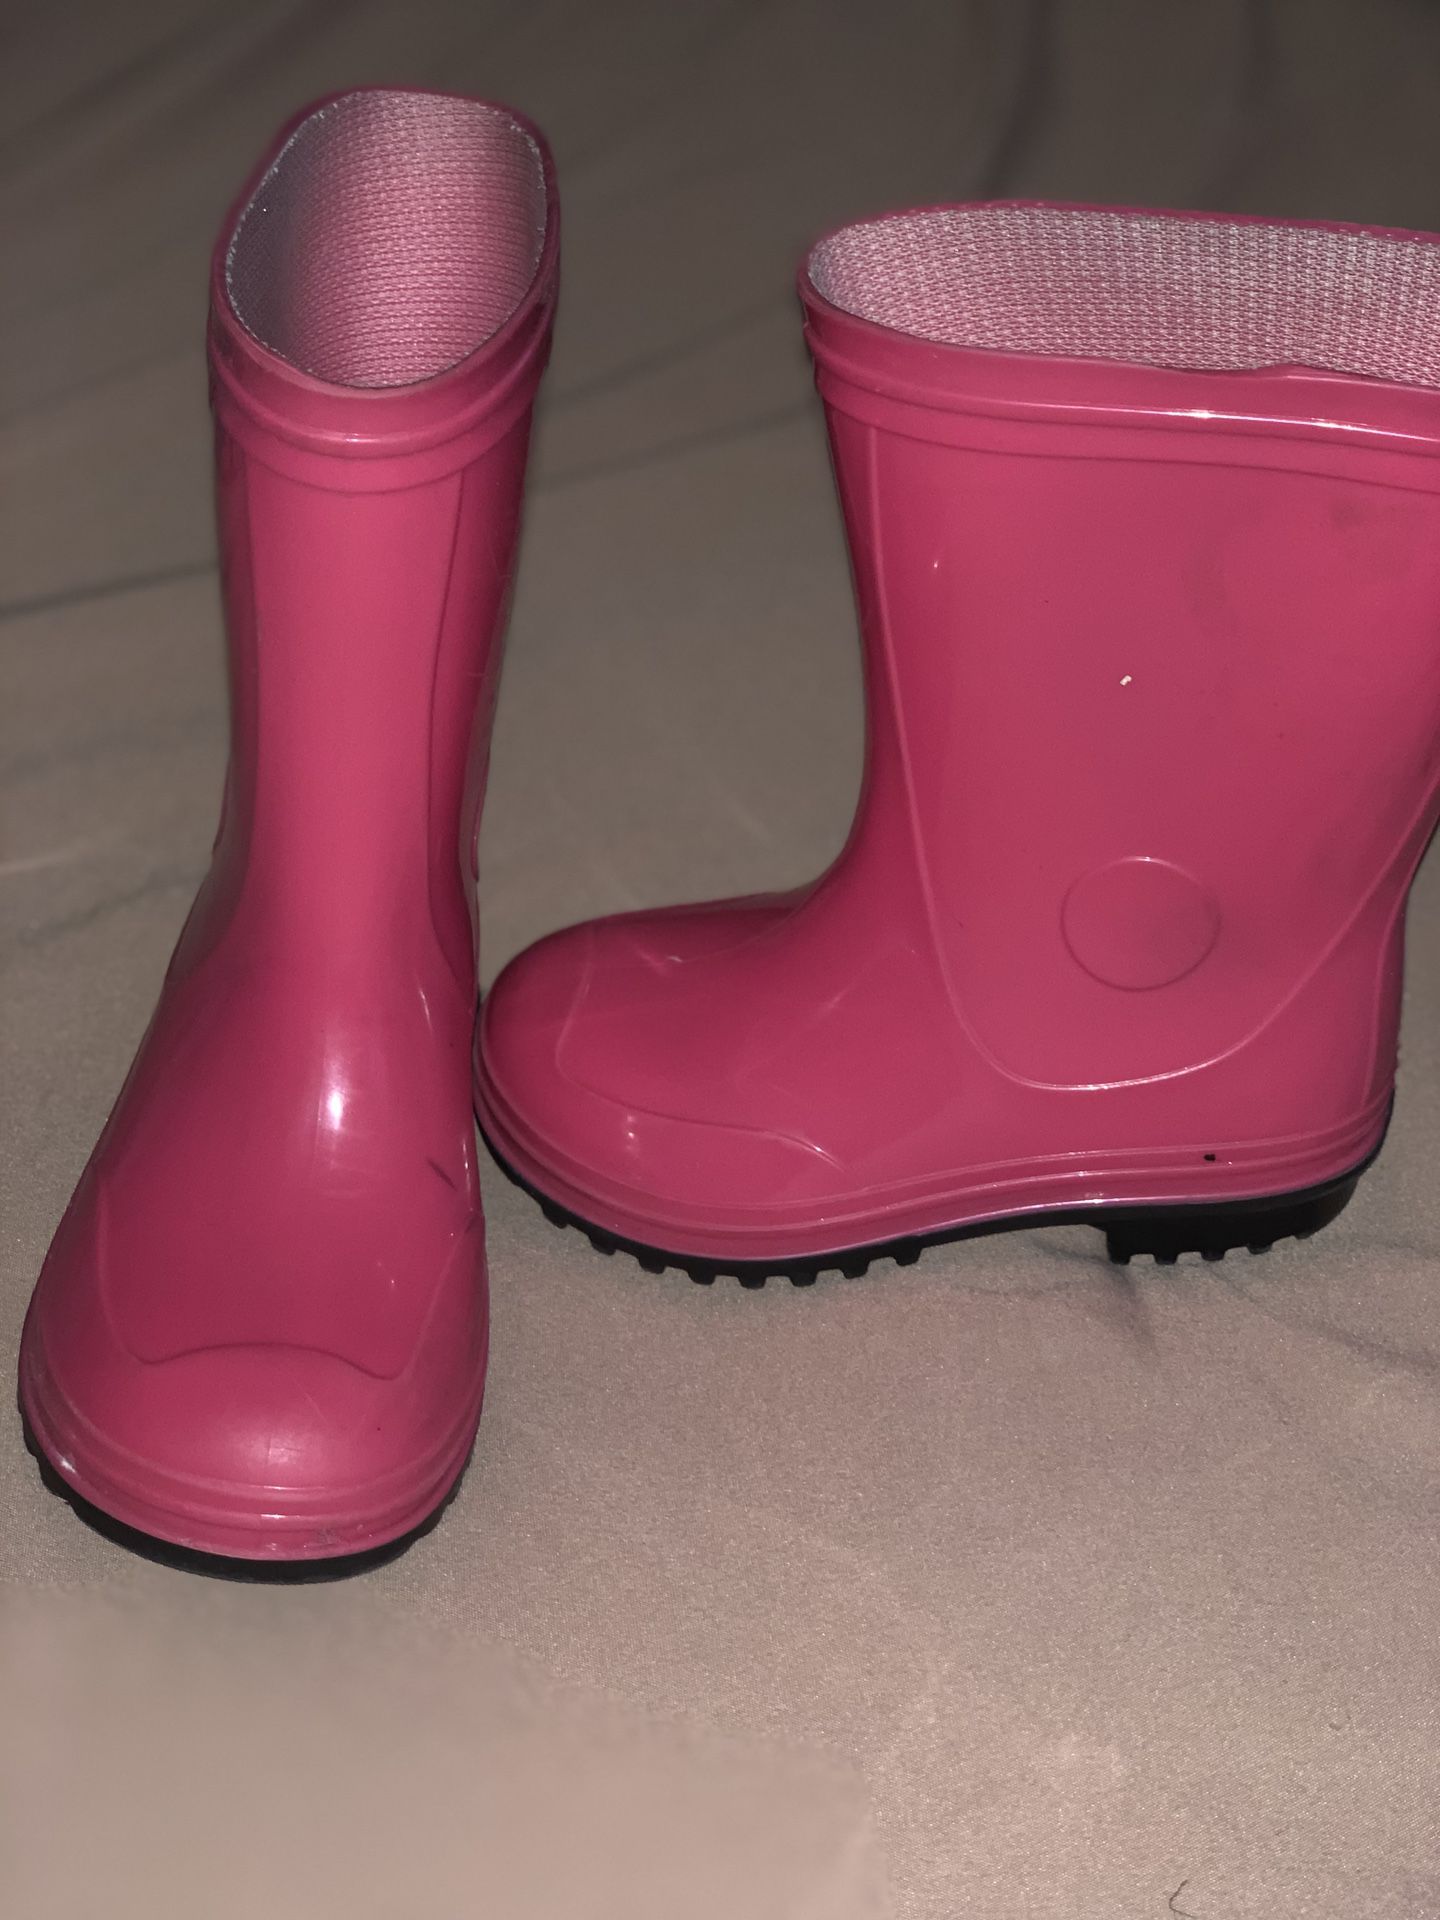 Pink kids rain boots size 8